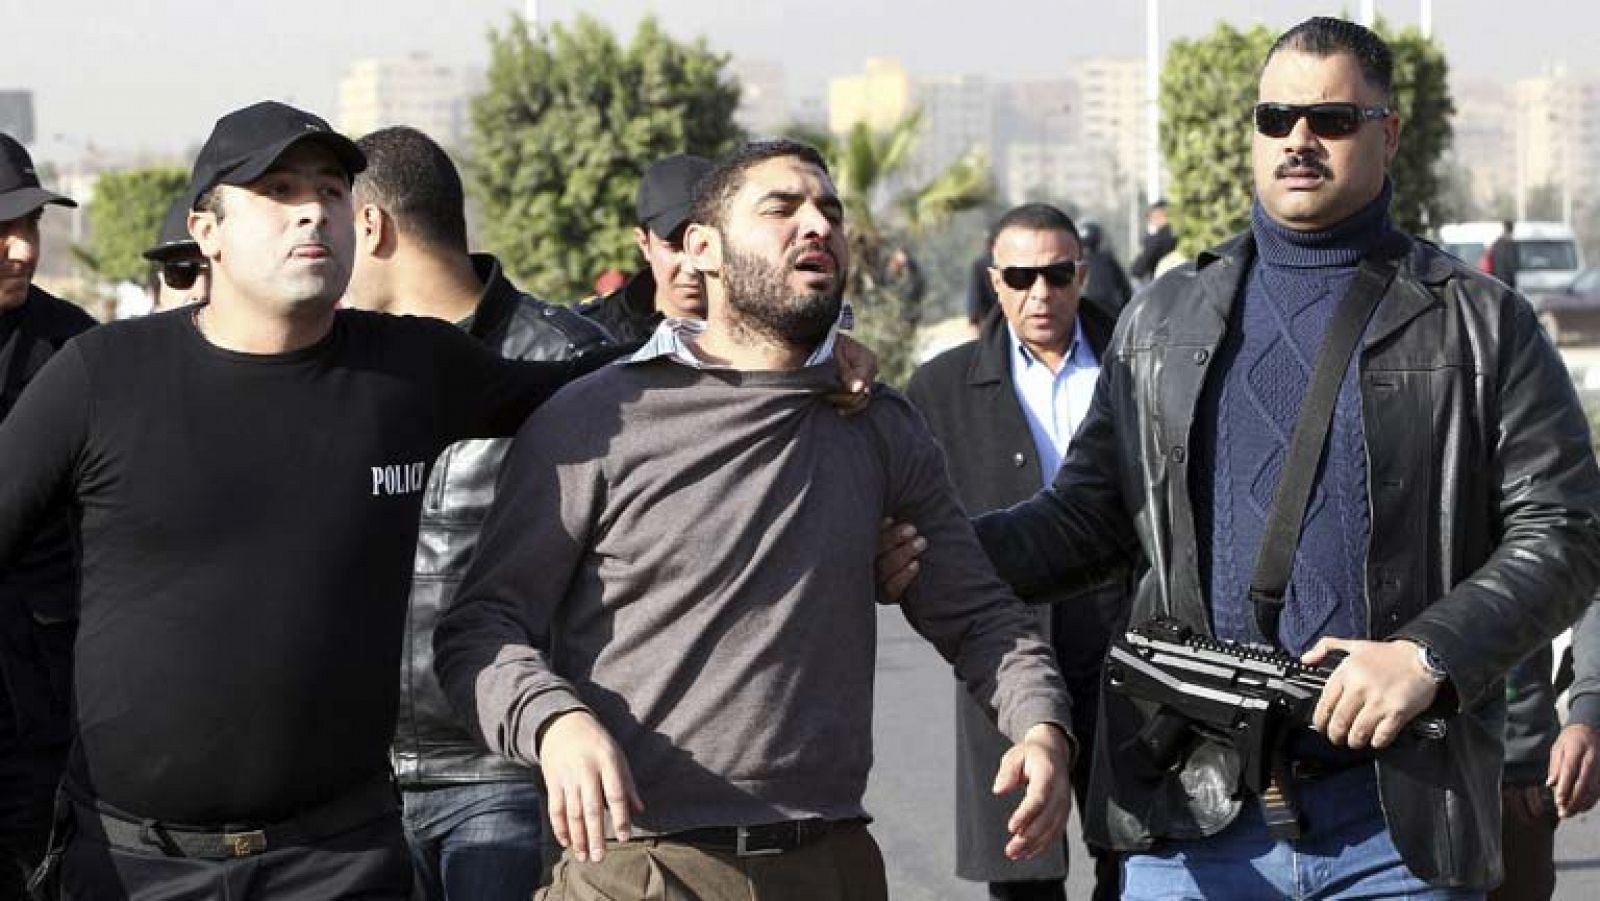 Telediario 1: Aplazan el juicio a Morsi | RTVE Play